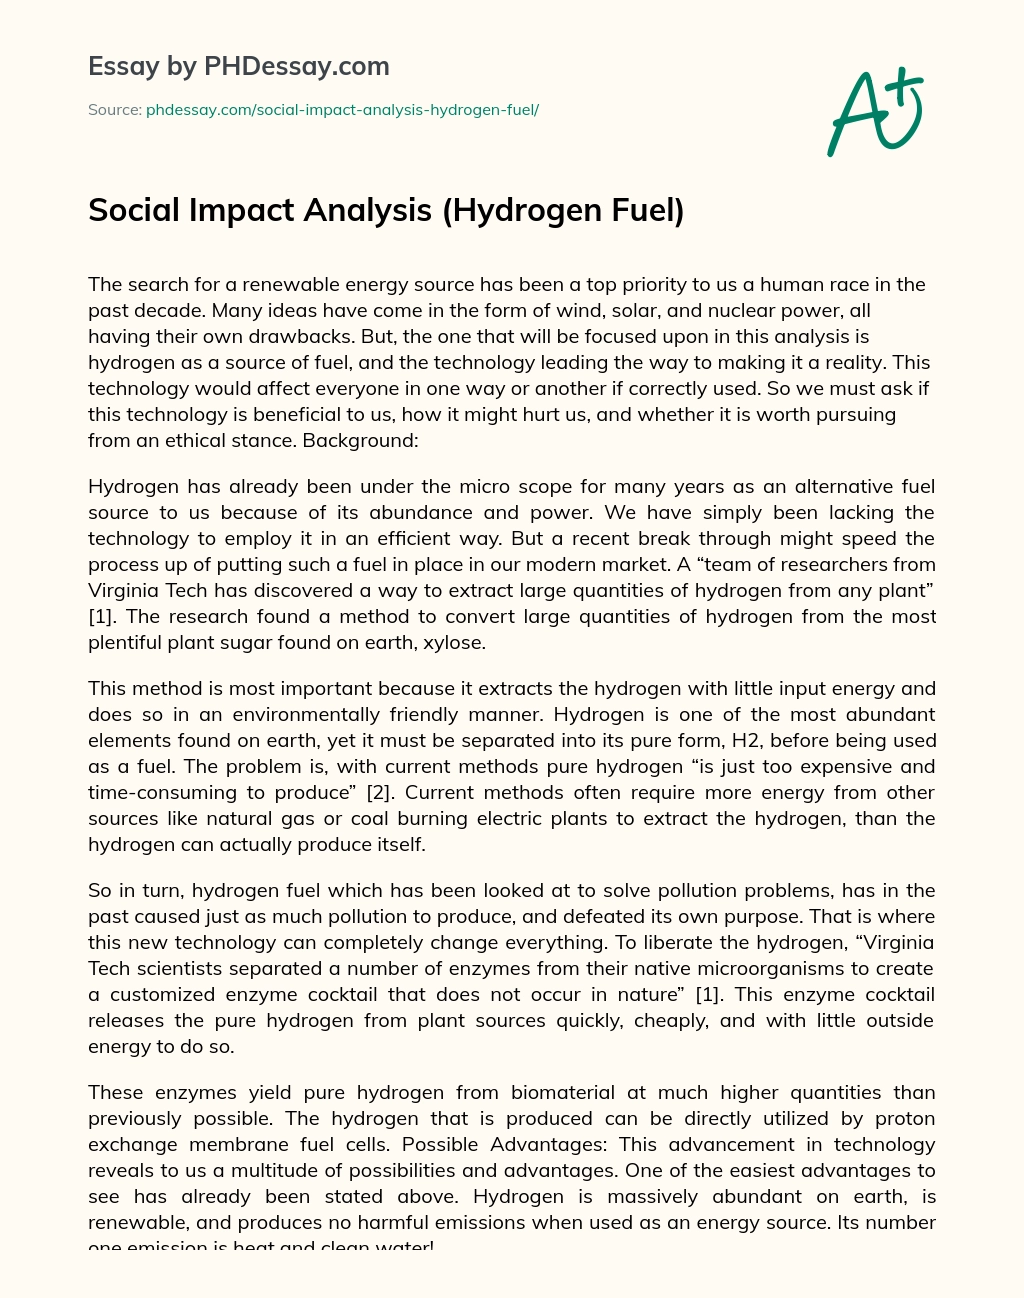 Social Impact Analysis (Hydrogen Fuel) essay